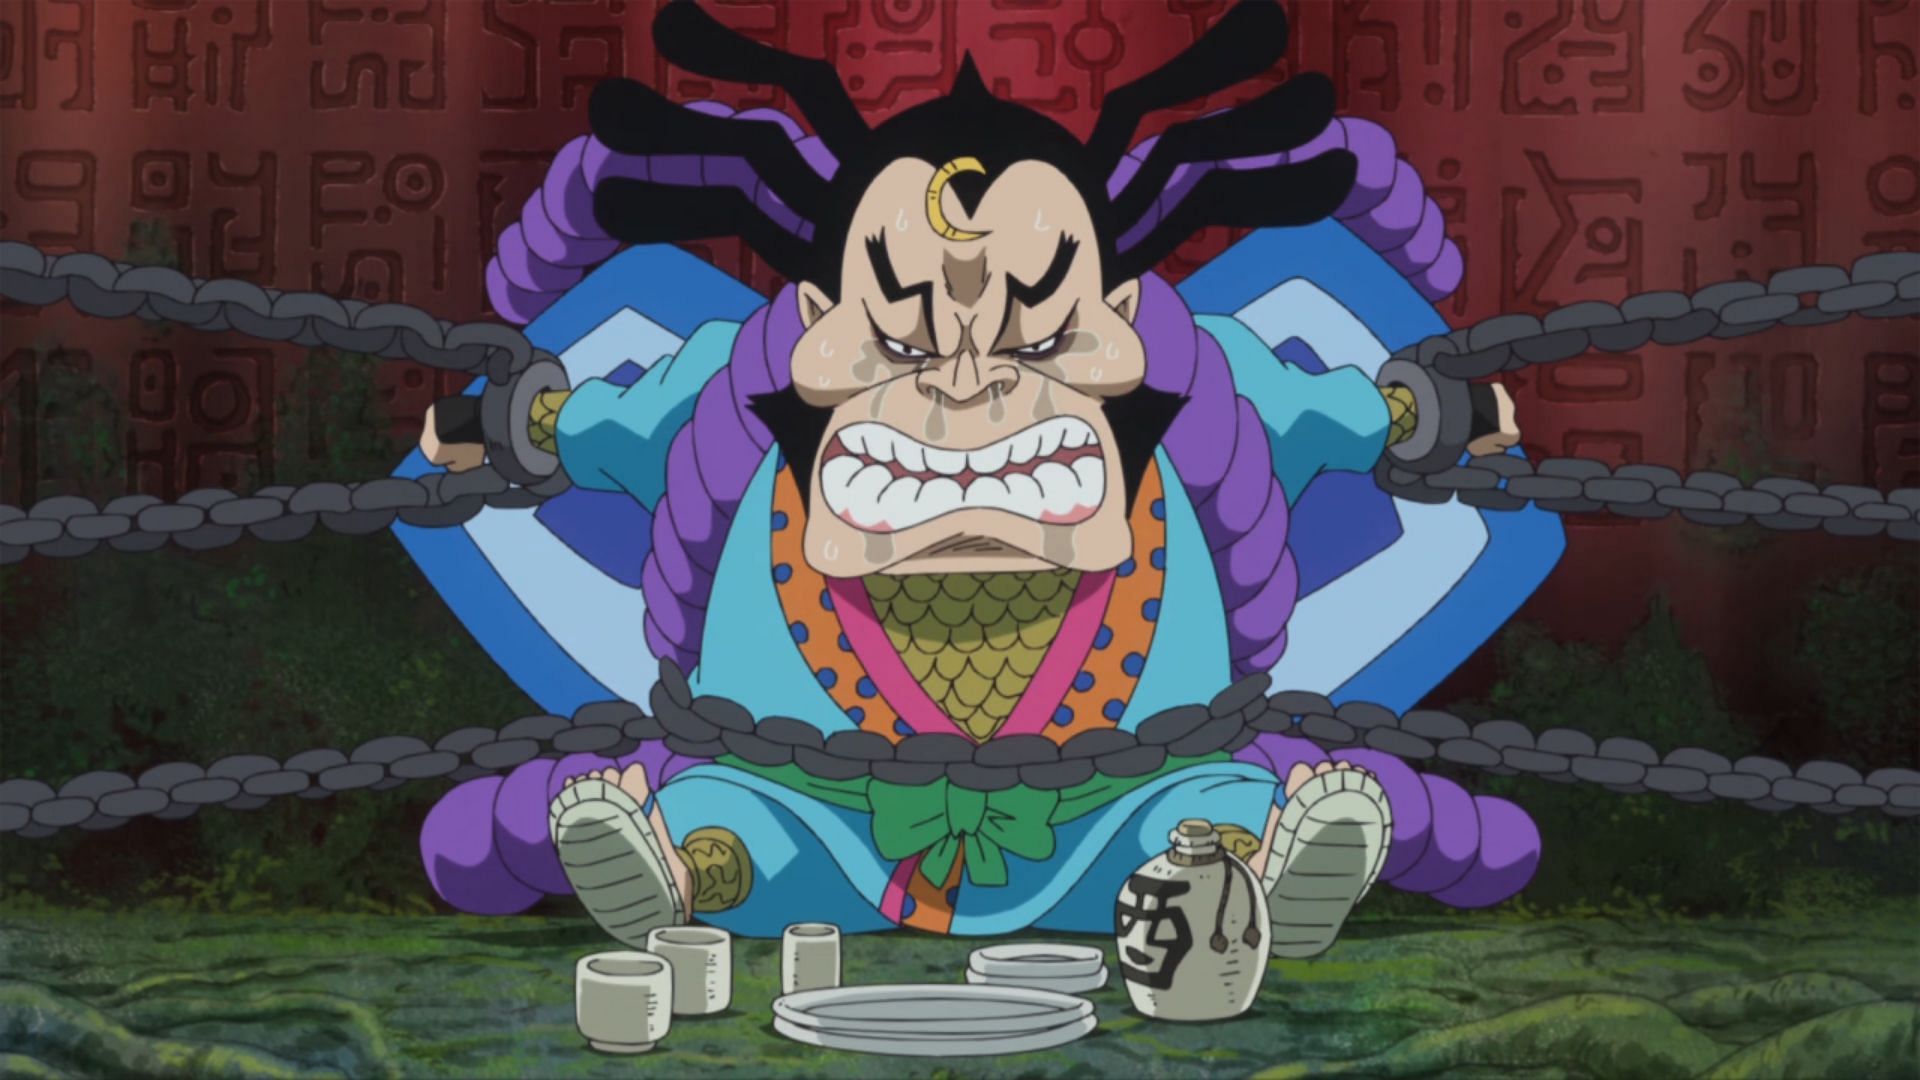 Raizo as seen in the One Piece anime (Image Credits: Eiichiro Oda/Shueisha, Viz Media, One Piece)